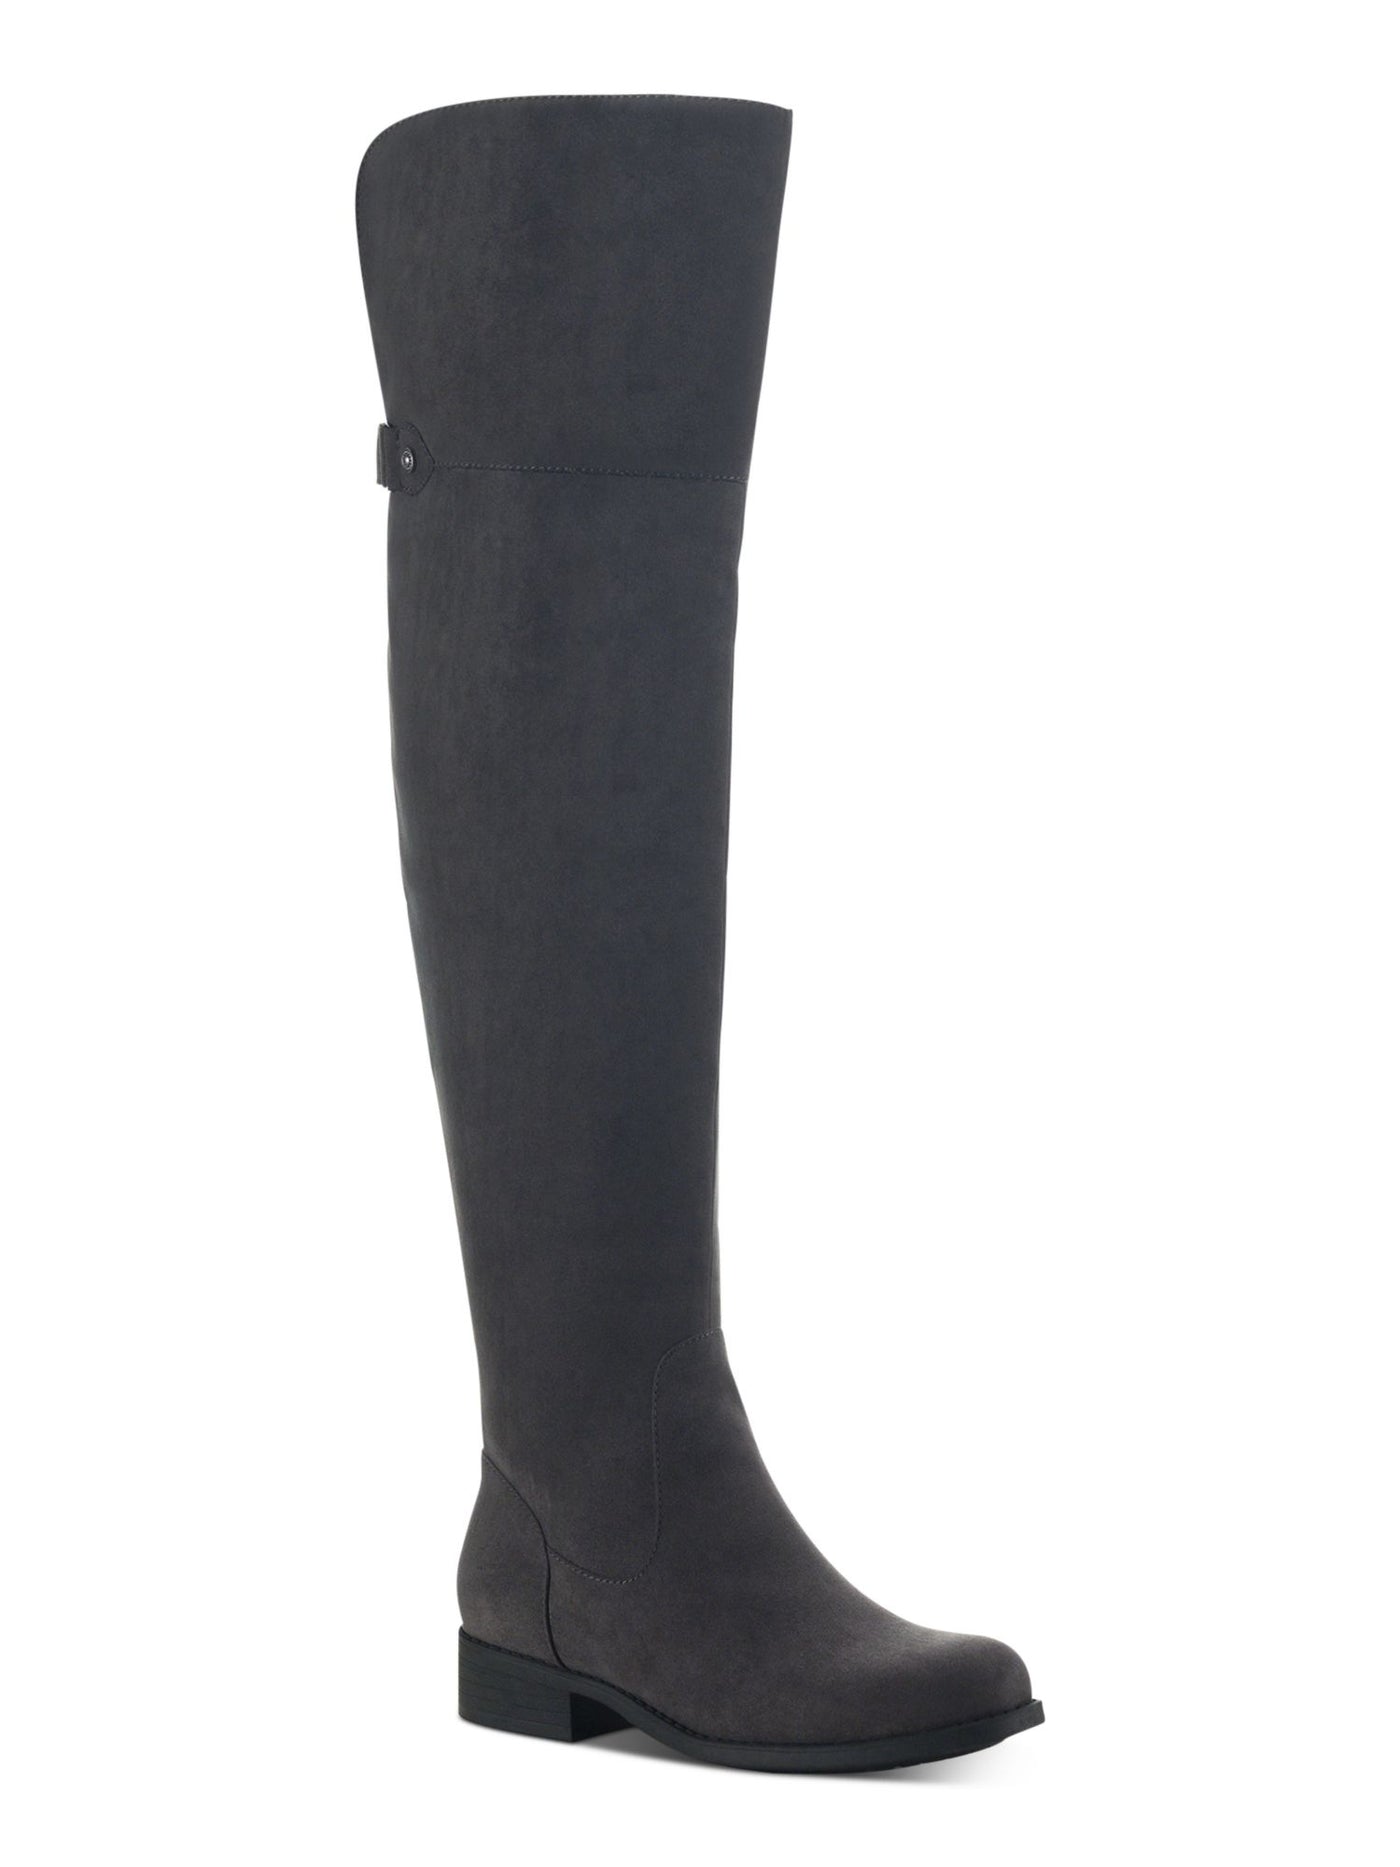 SUN STONE Womens Gray Goring Slip Resistant Allicce Round Toe Block Heel Zip-Up Boots Shoes 7.5 M WC